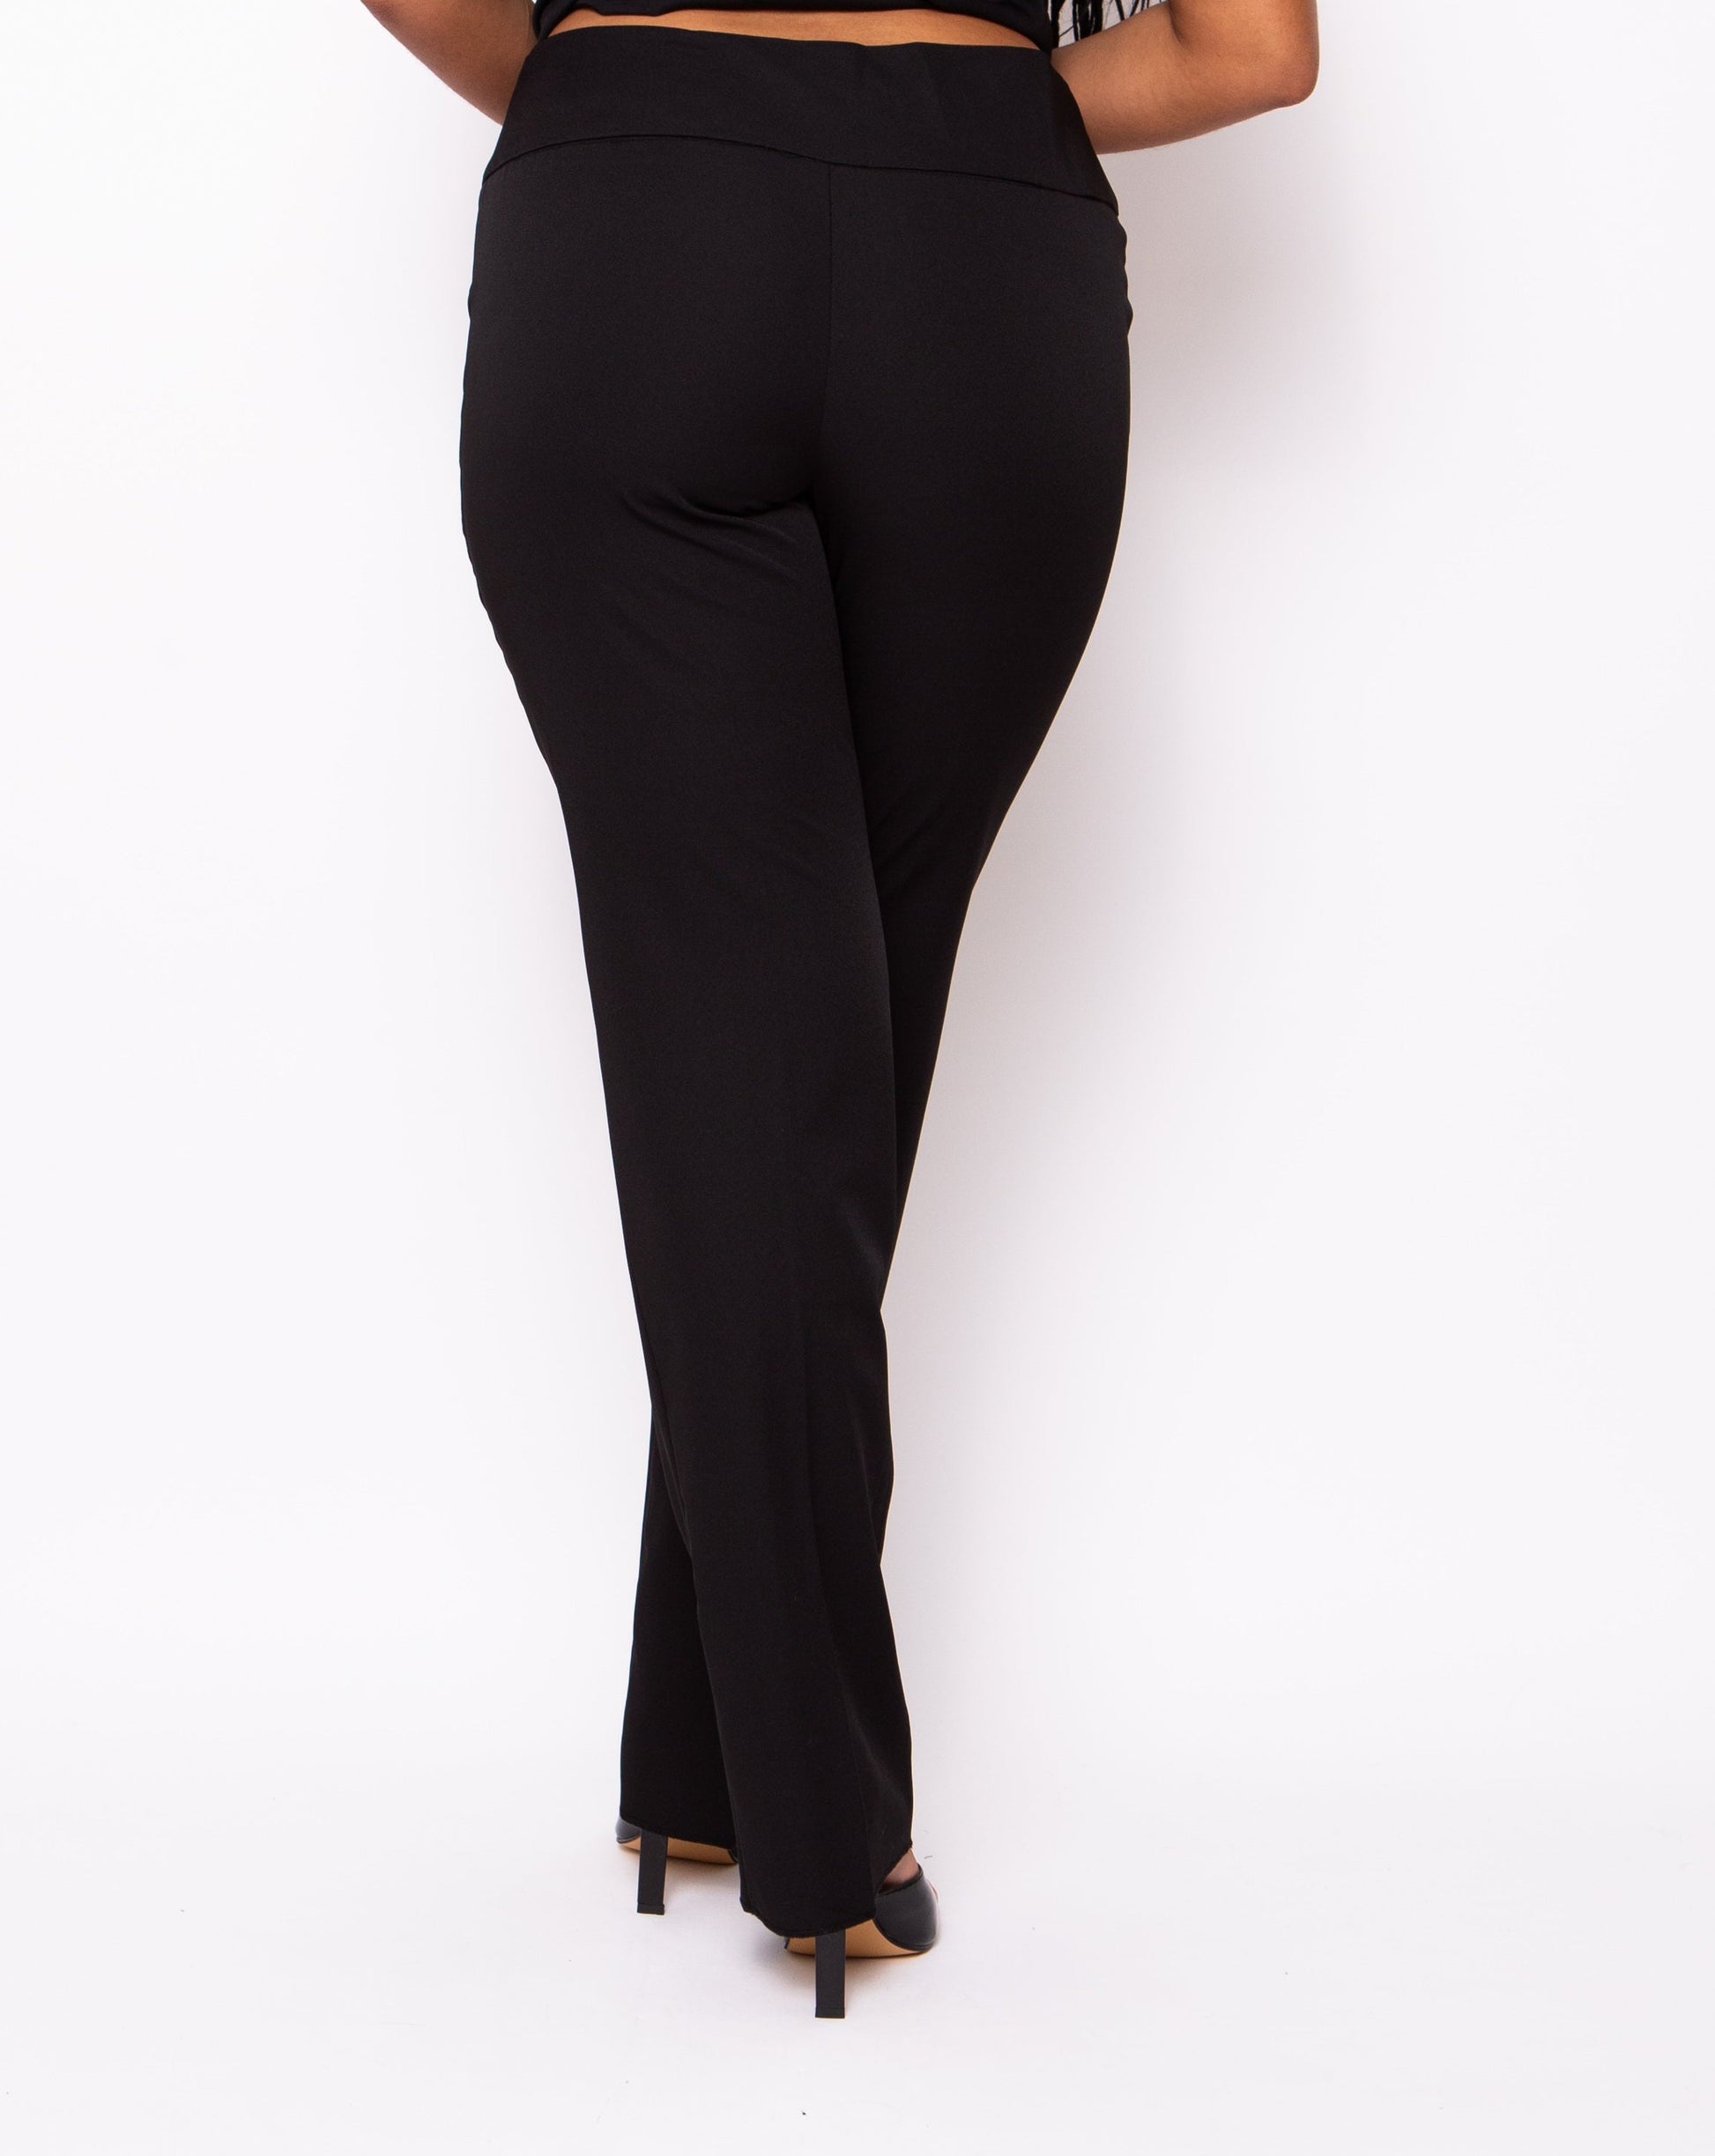 Black Trousers for Women  Female Black Beauty Work Formal Pants –  Uniforms4Healthcare